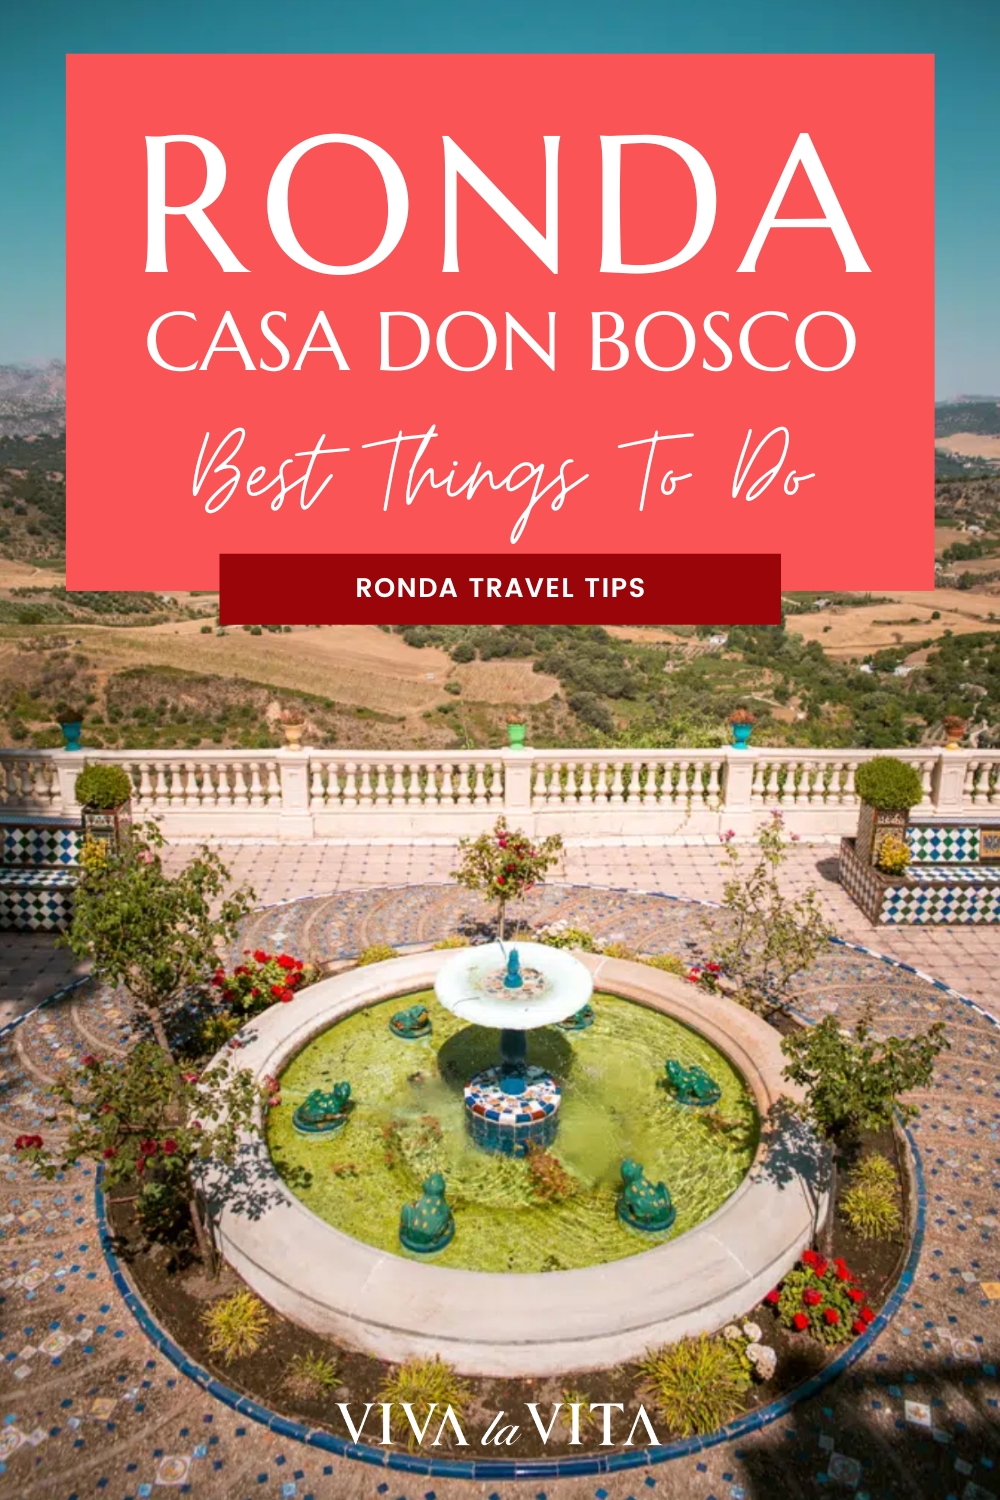 The gardens of Casa don Bosco in Ronda, Southern Spain with a headline: Ronda Casa don Bosco, best things to do, Ronda travel tips